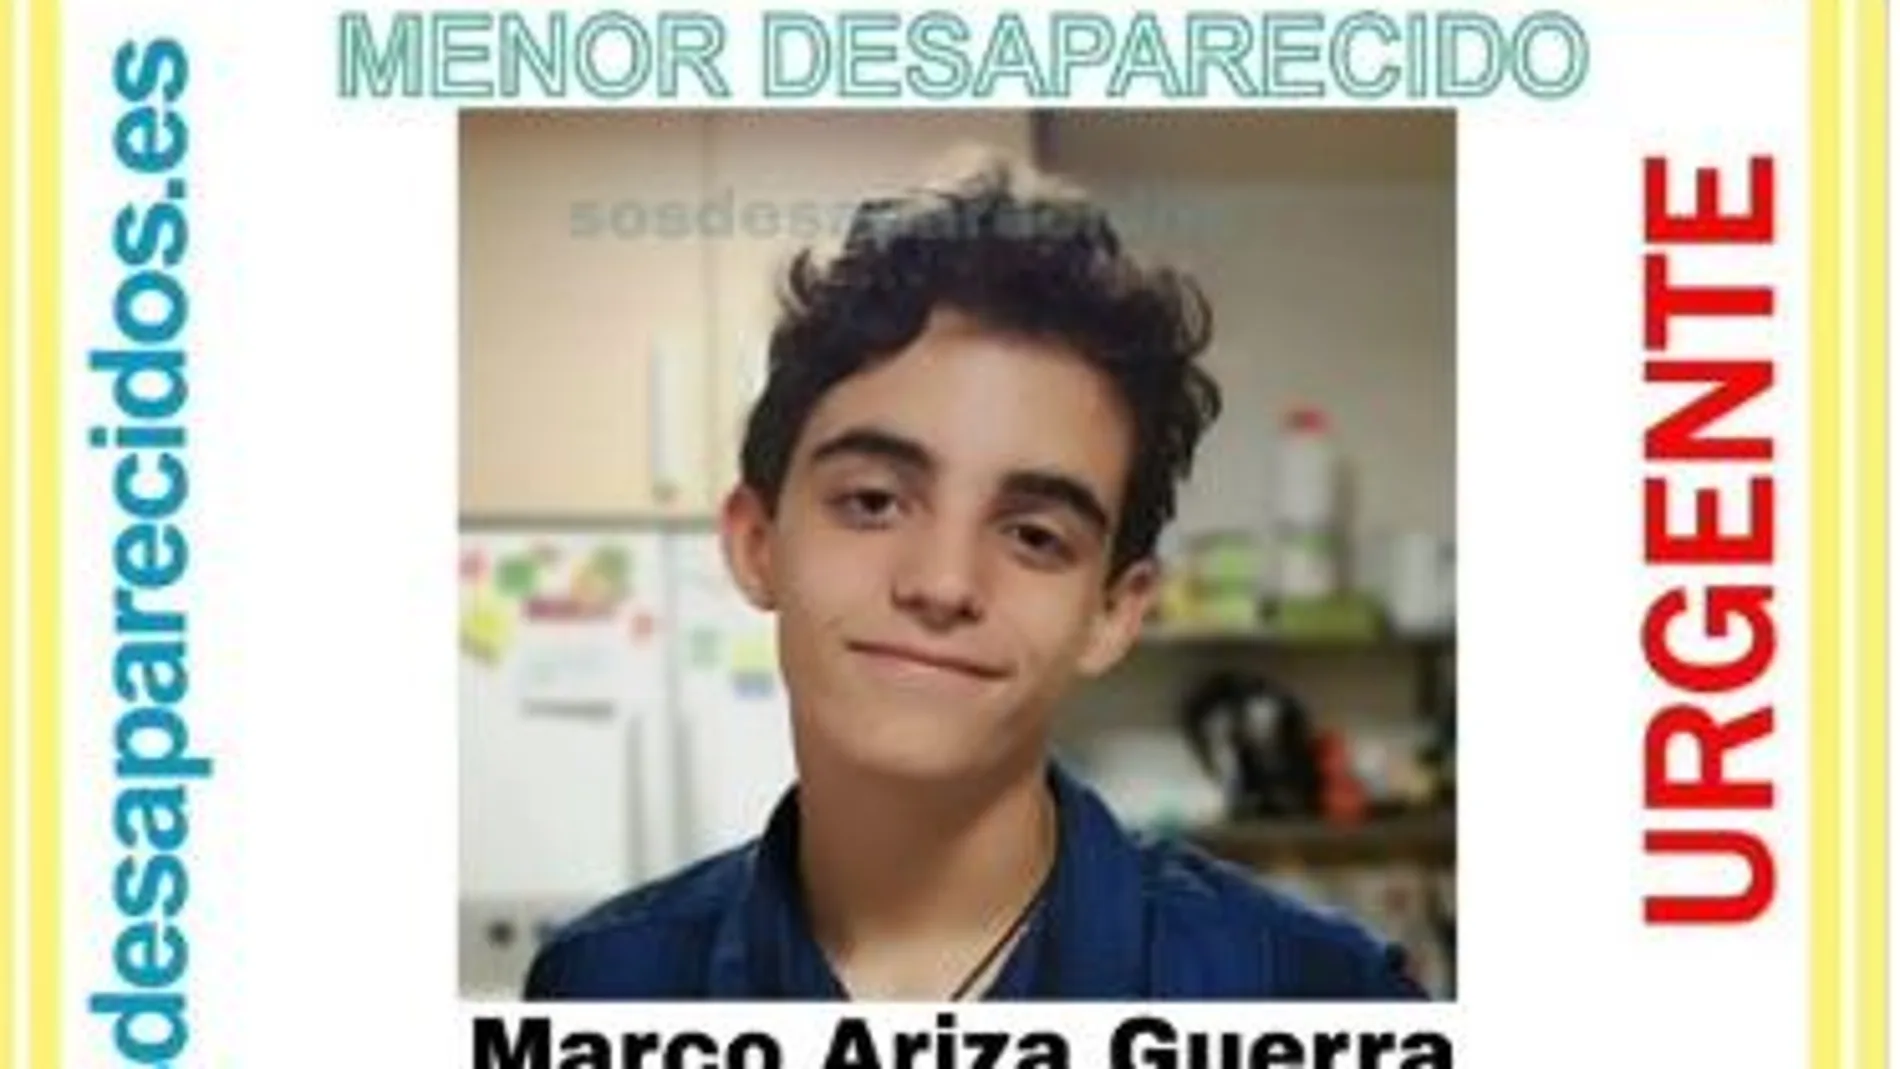 El joven desaparecido ayer en Torrejón de la Calzada